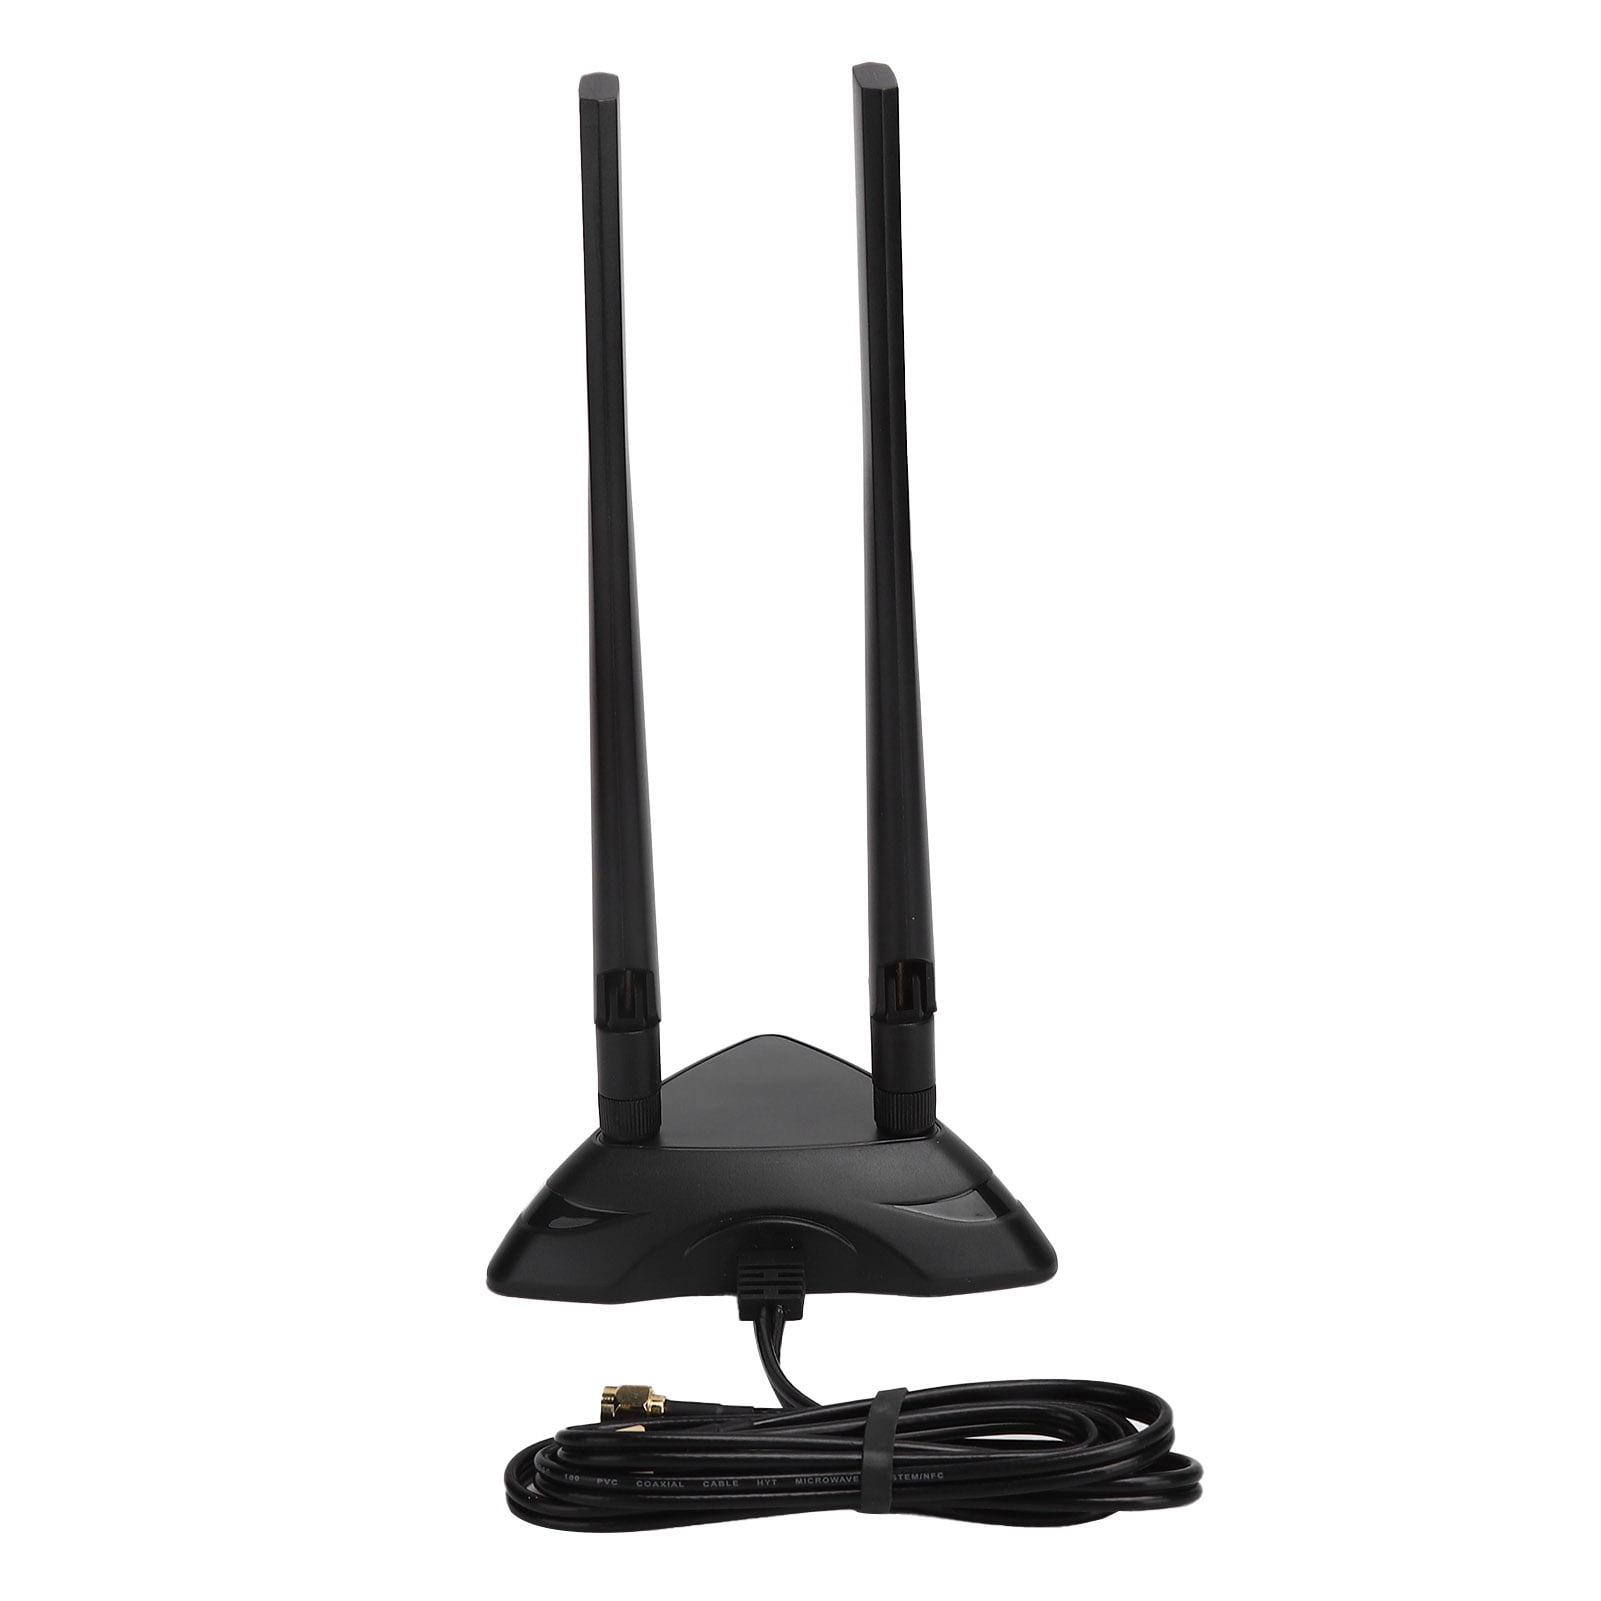 10 x Antenna 2.4G 3dBi GPRS GSM SMA male Tilt-Swivel for Wireless Router 